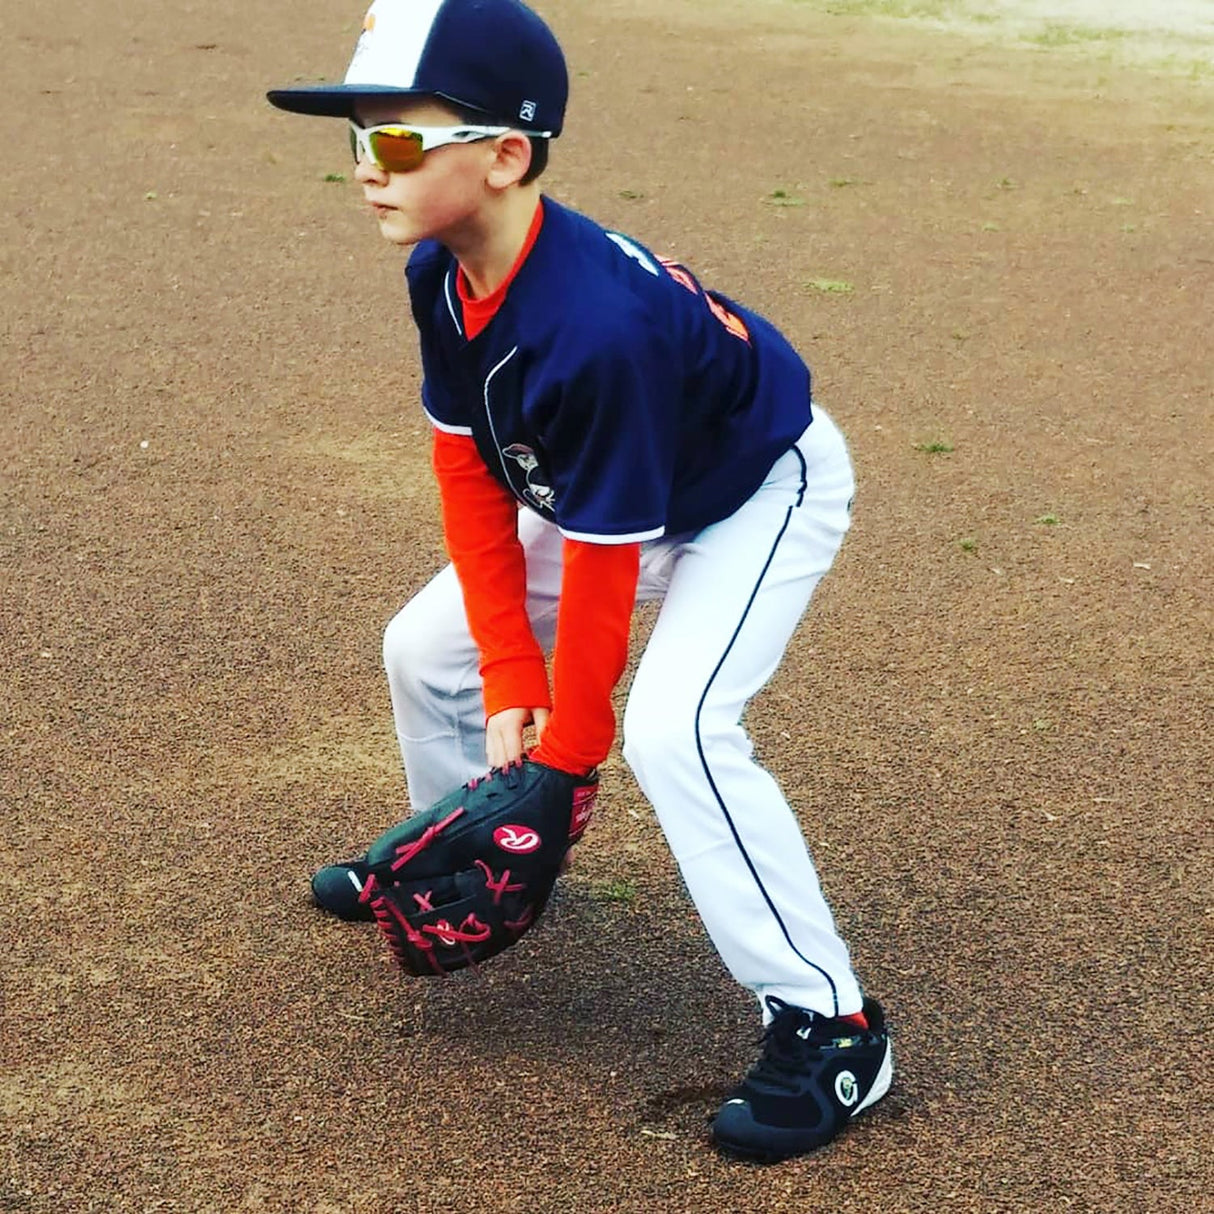 Rawlings Kids Youth 132 Baseball Sport Sunglasses - White/Orange